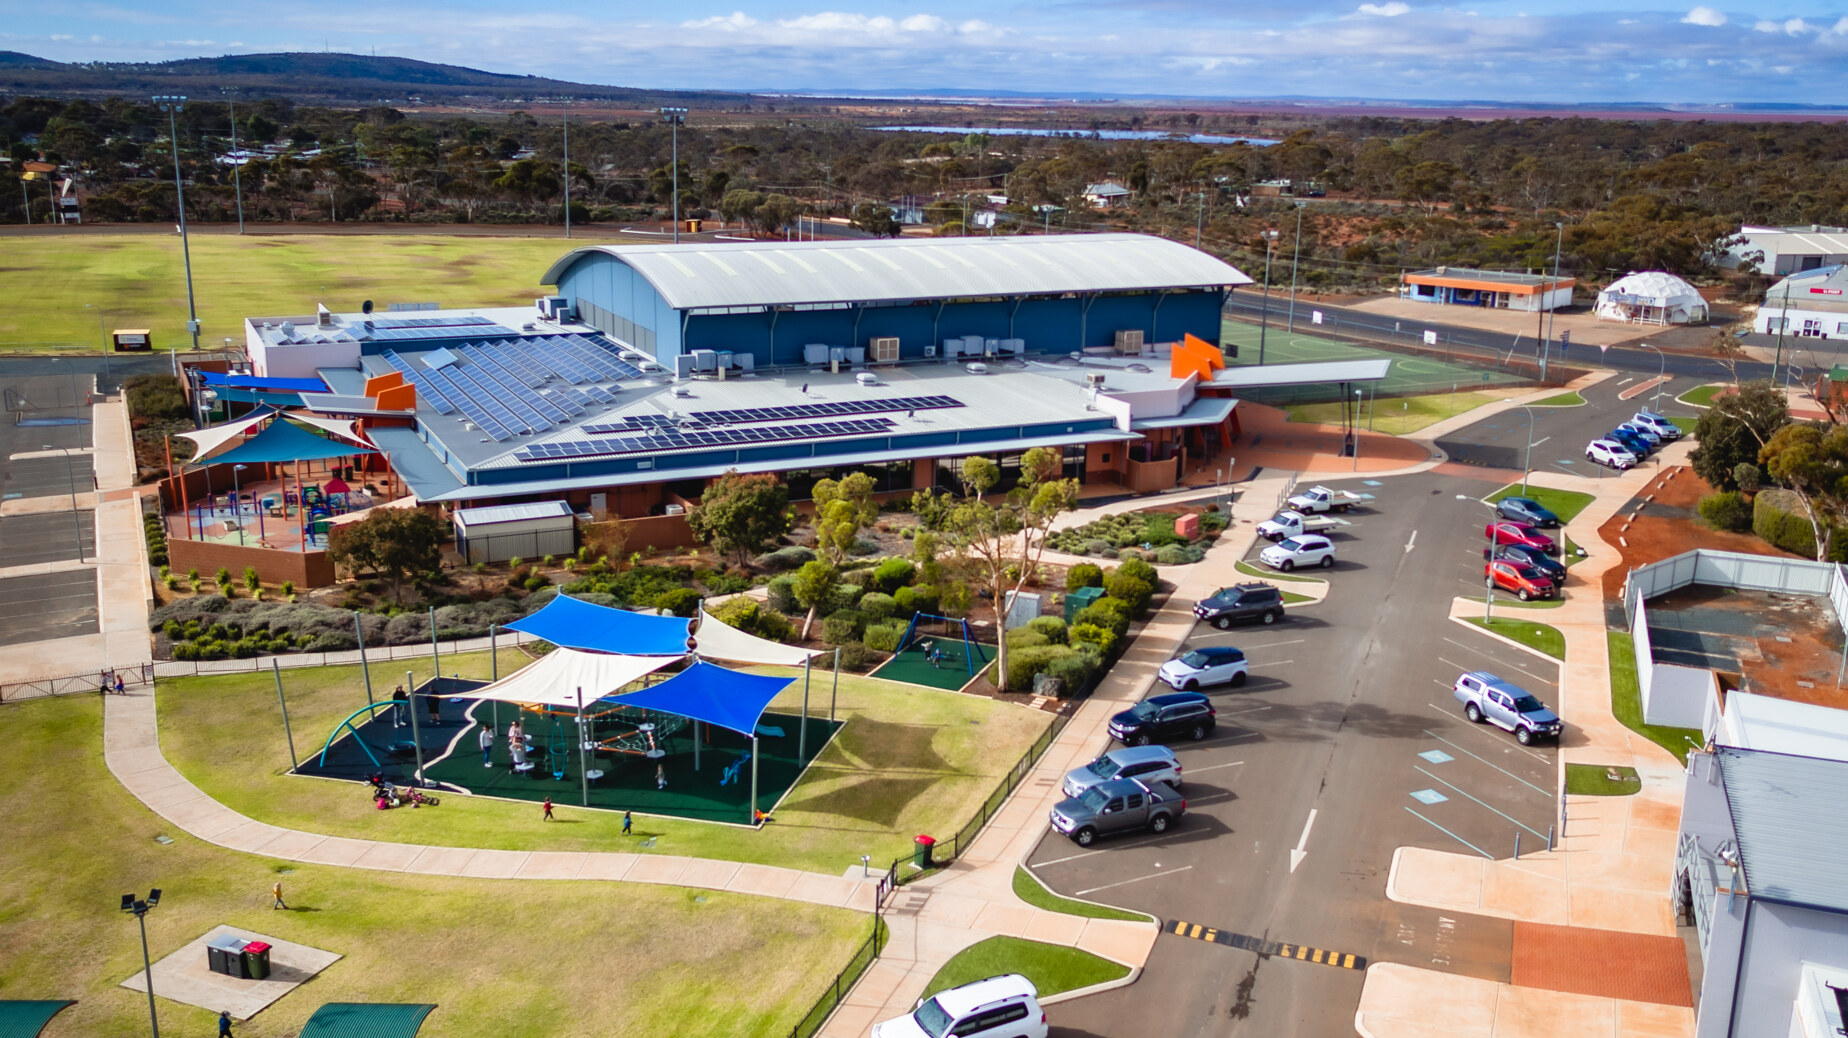 An aerial image of Kambalda Recreational Facility in Western Australia